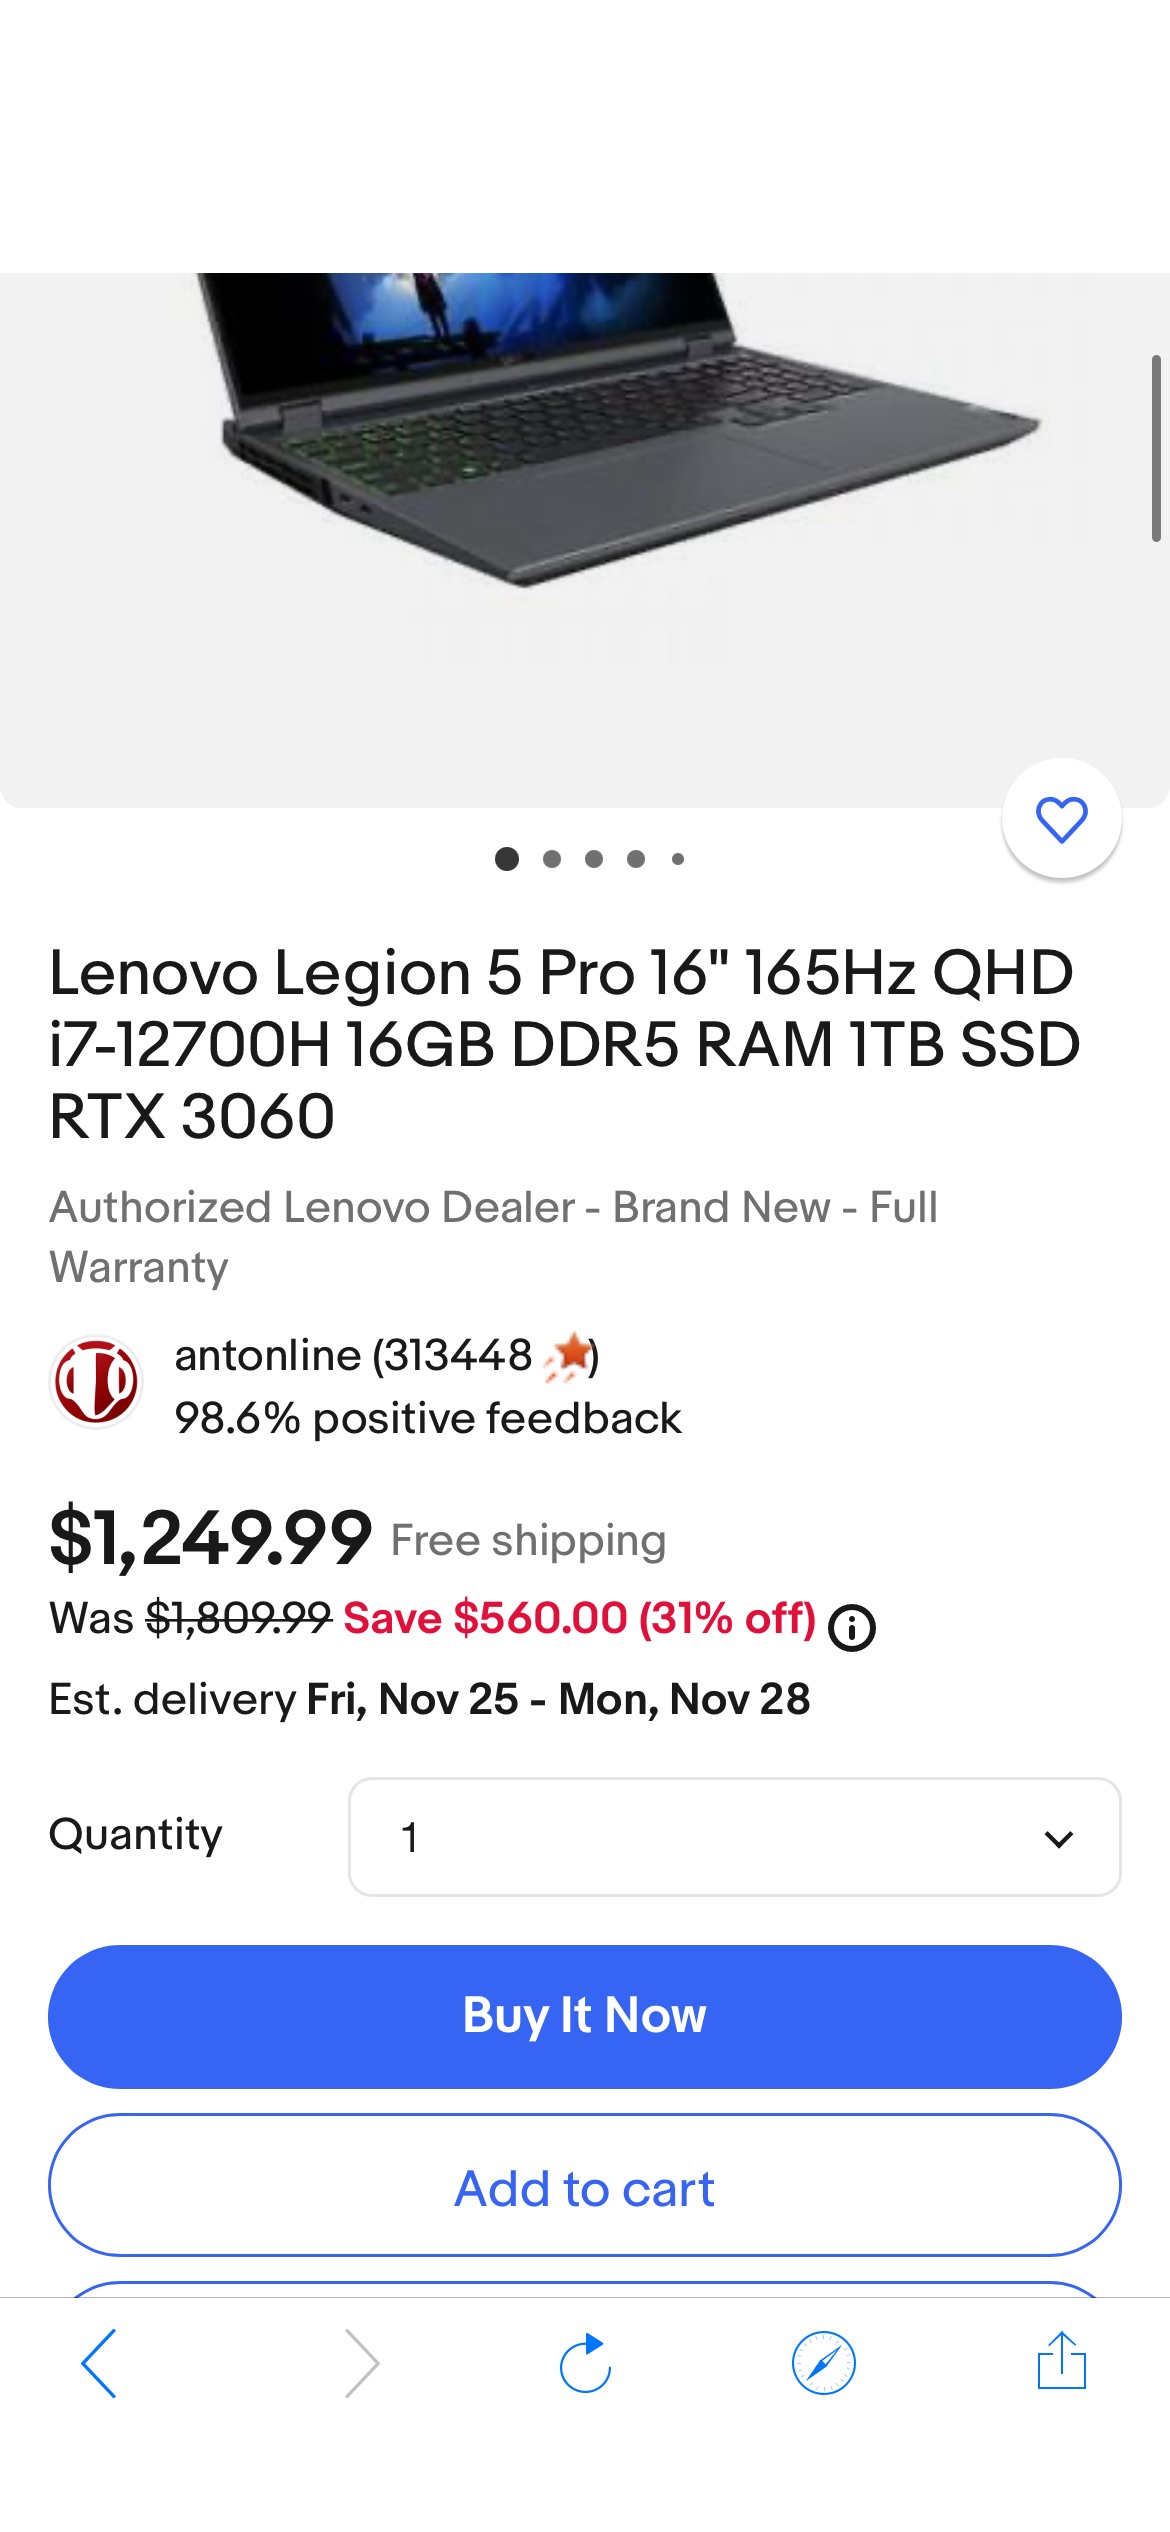 Lenovo Legion 5 Pro 16" 165Hz QHD i7-12700H 16GB DDR5 RAM 1TB SSD RTX 3060 196378284514 | eBay